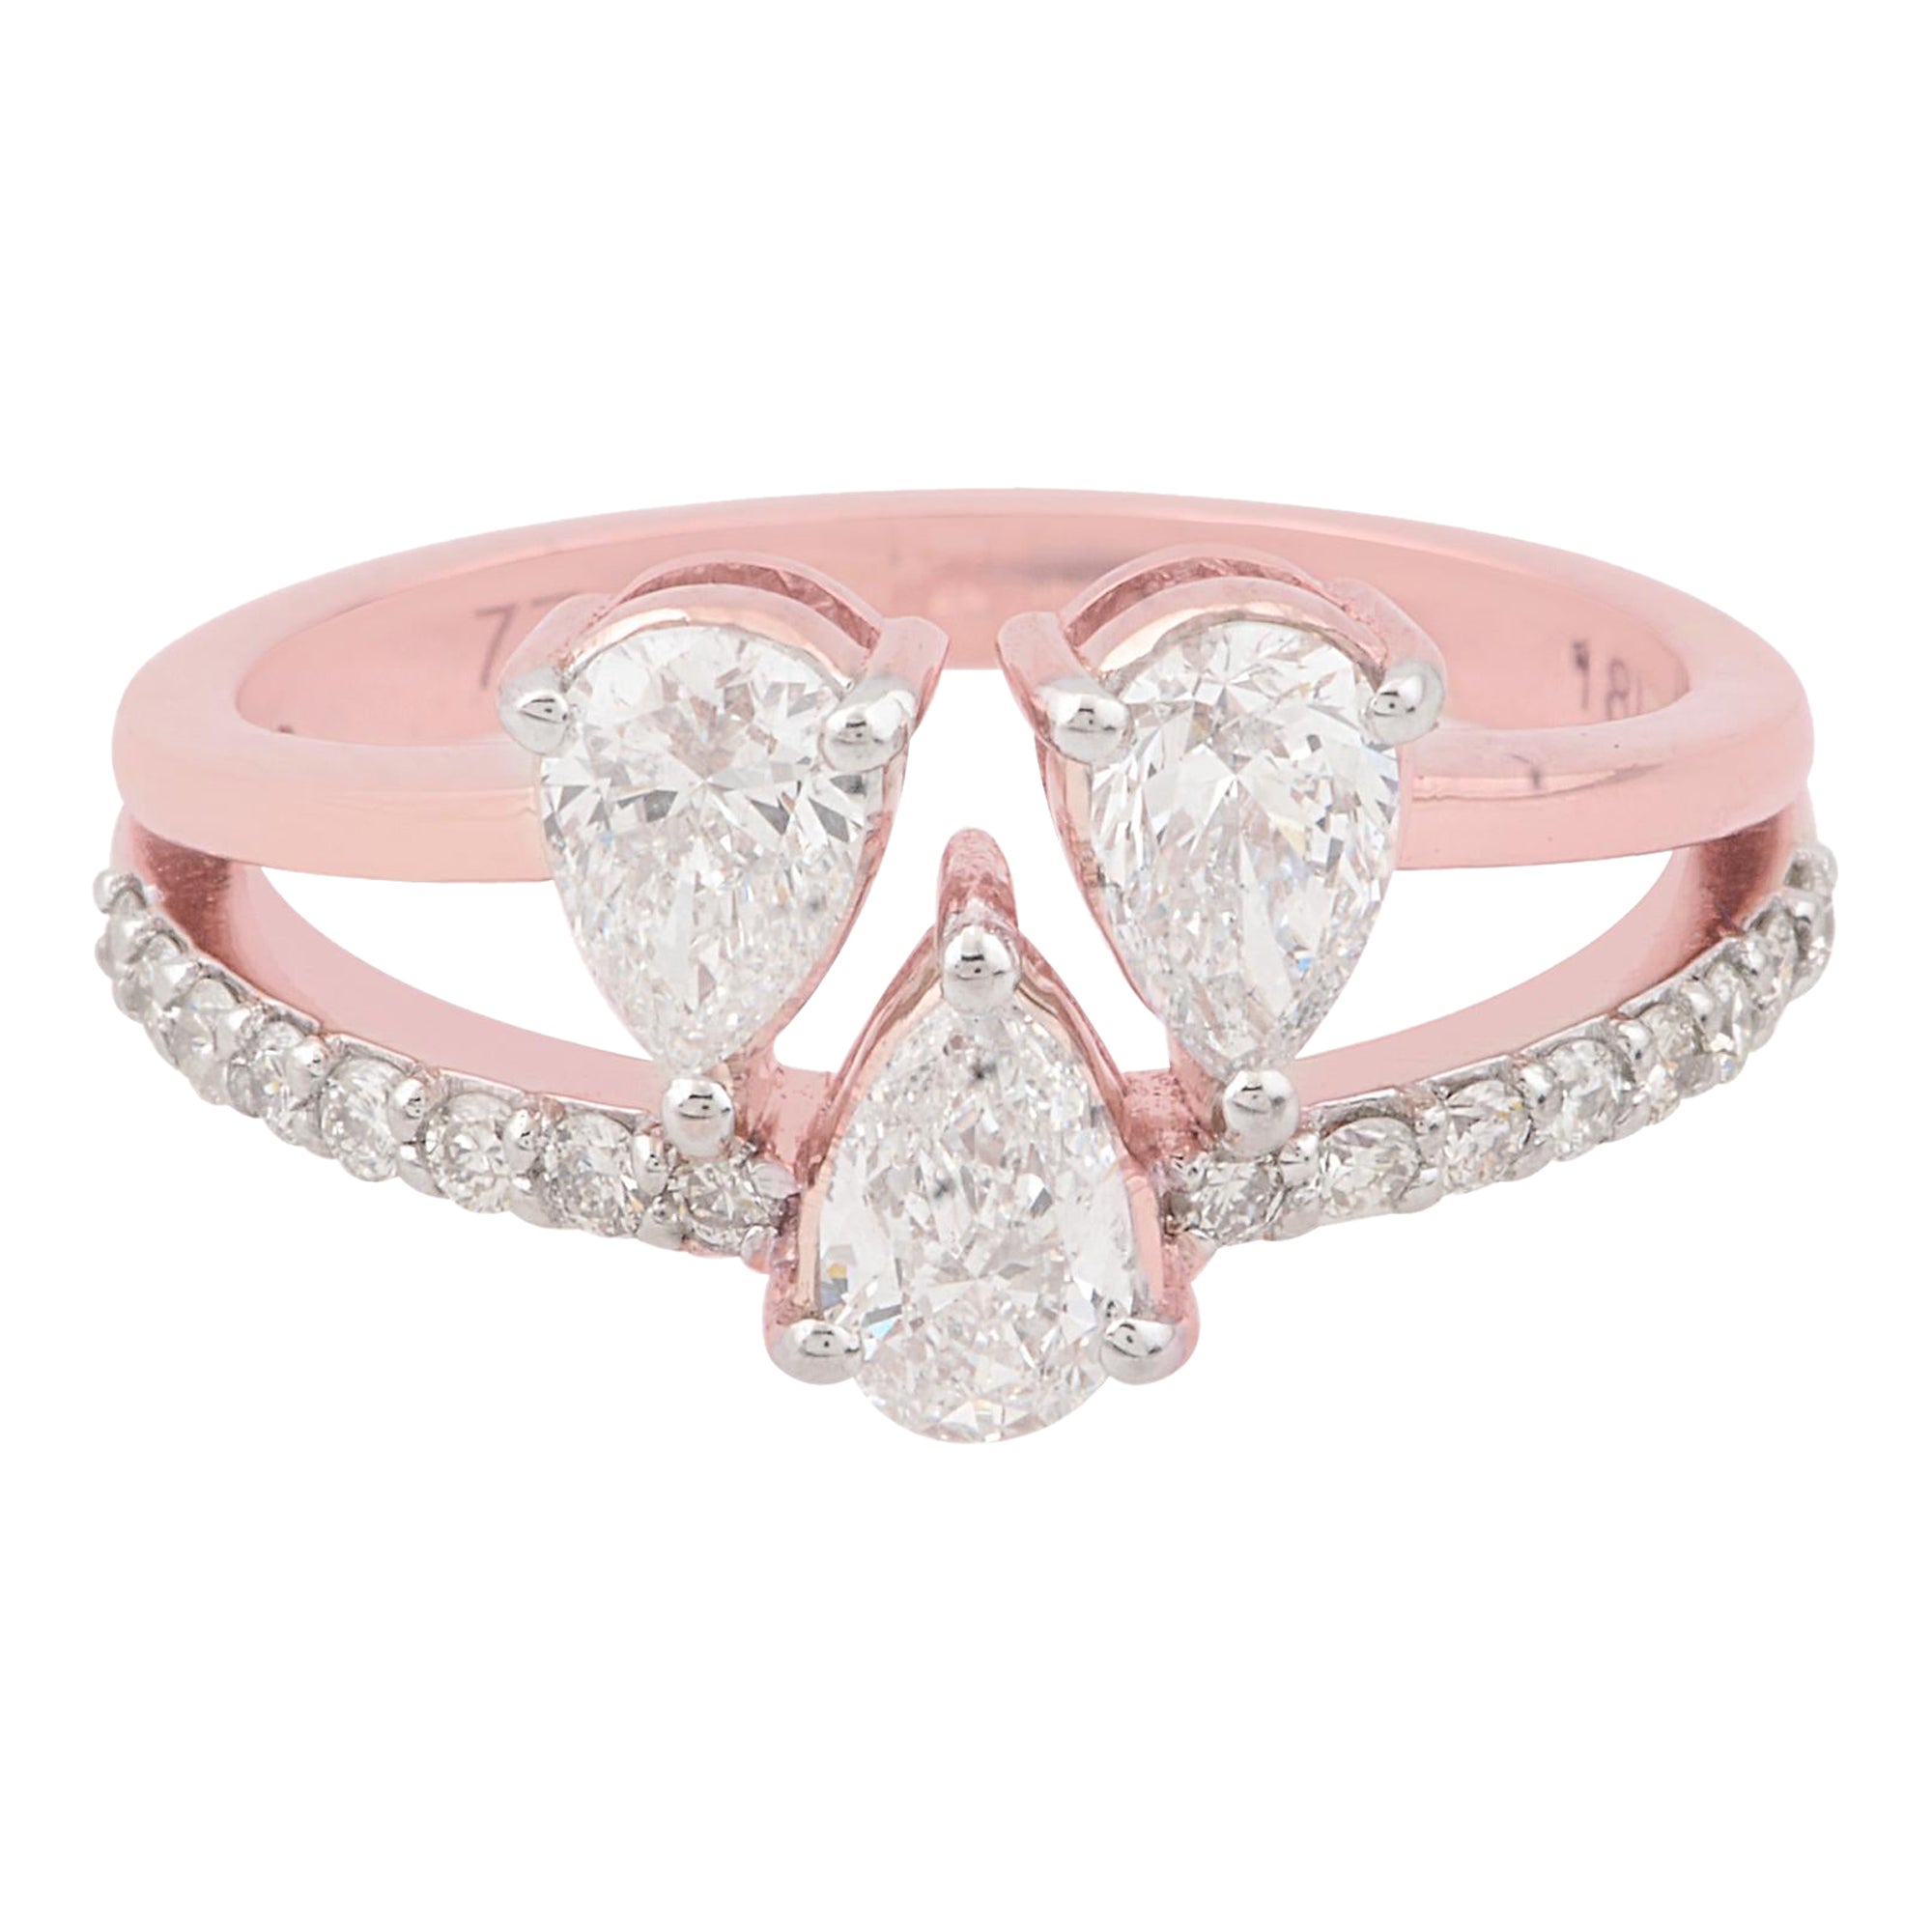 1.13 Carat SI Clarity HI Color Pear Diamond Ring 18k Rose Gold Handmade Jewelry